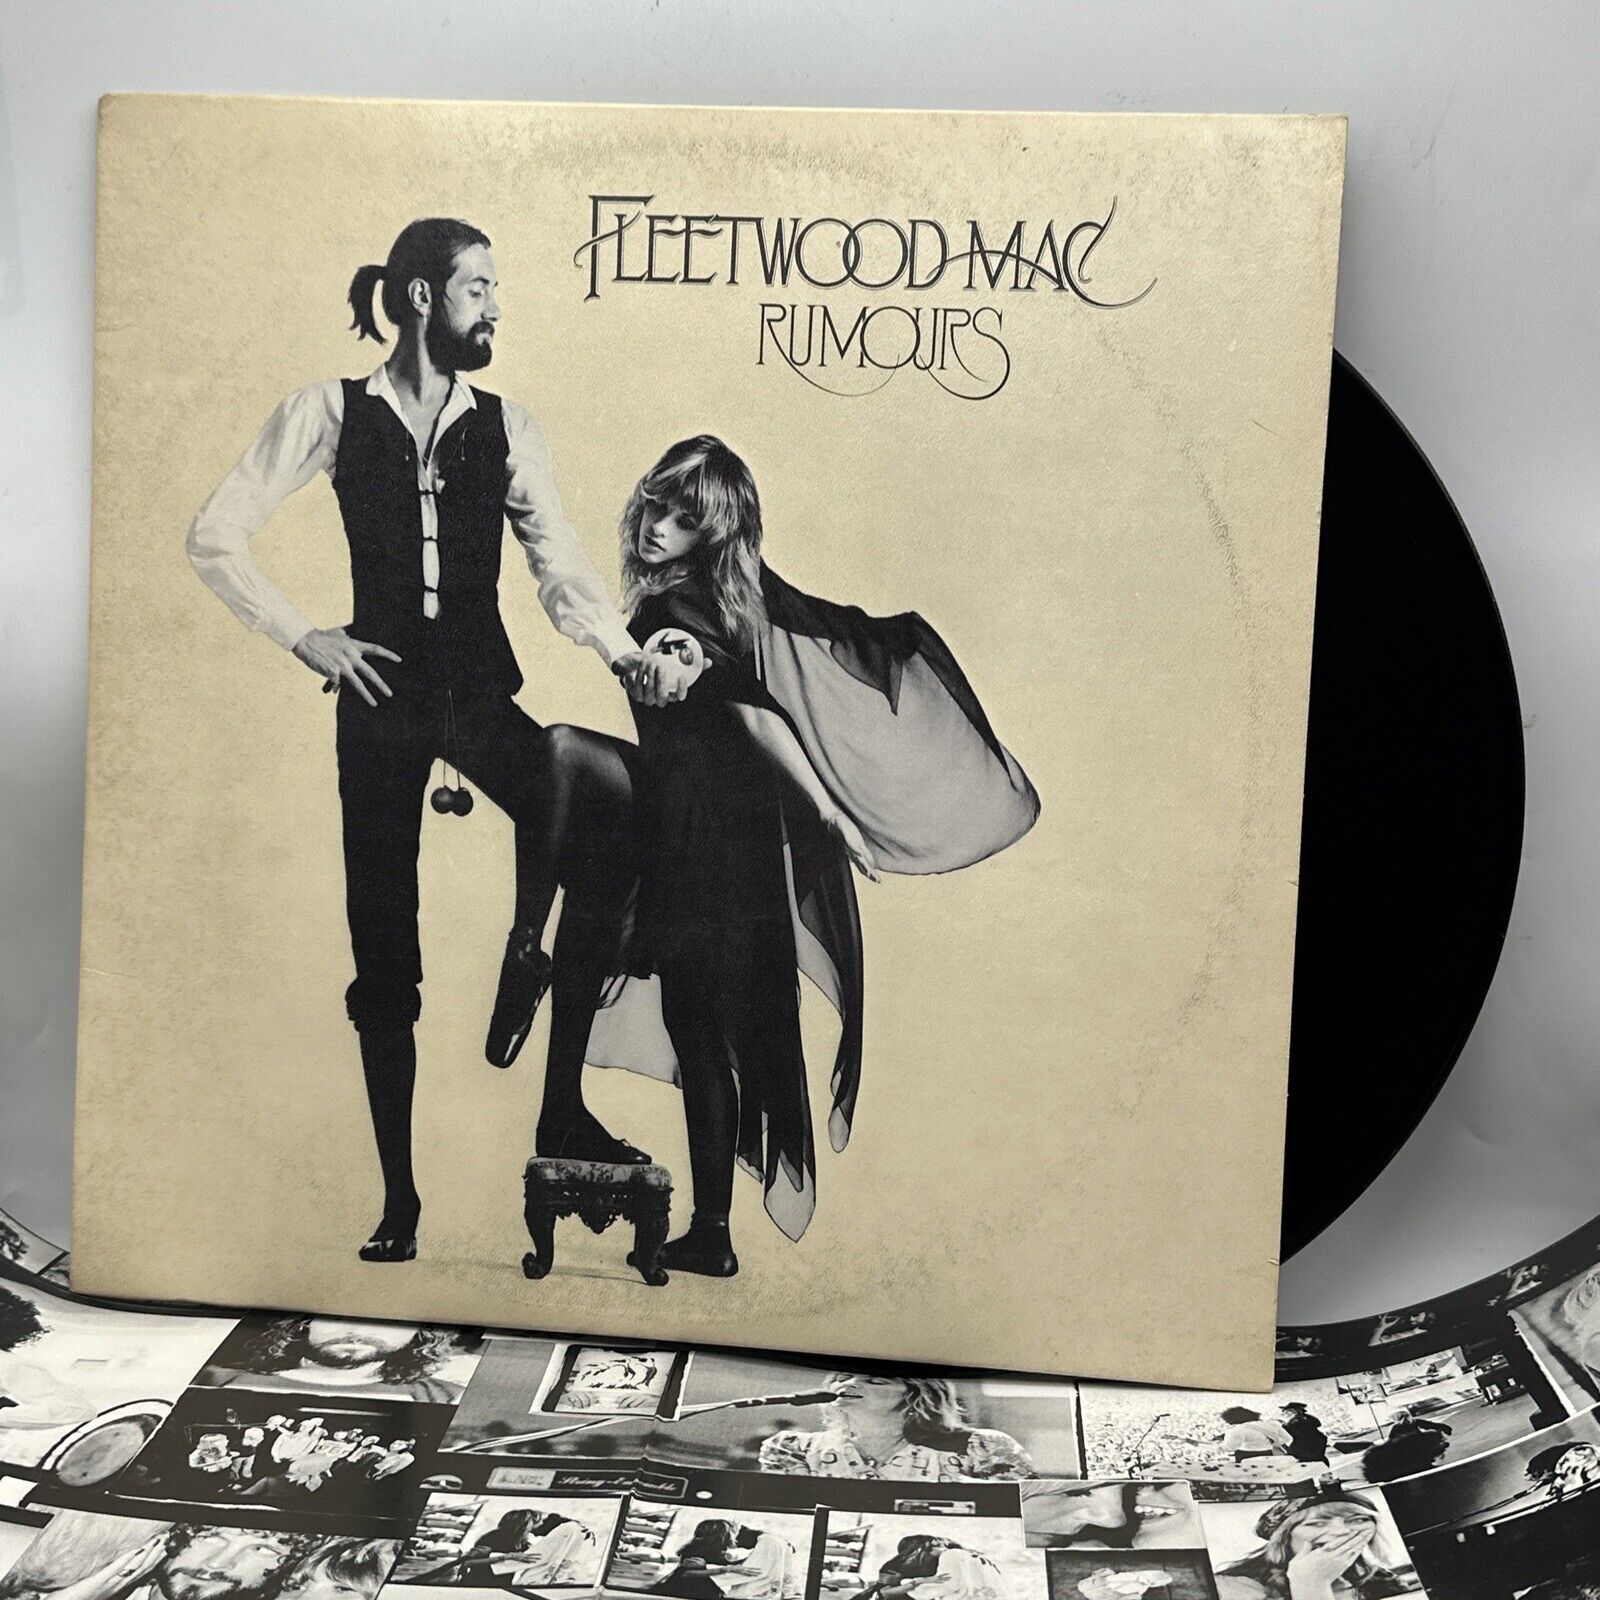 Fleetwood Mac - Rumours - 1977 US 1st Press Album (EX) Ultrasonic Clean